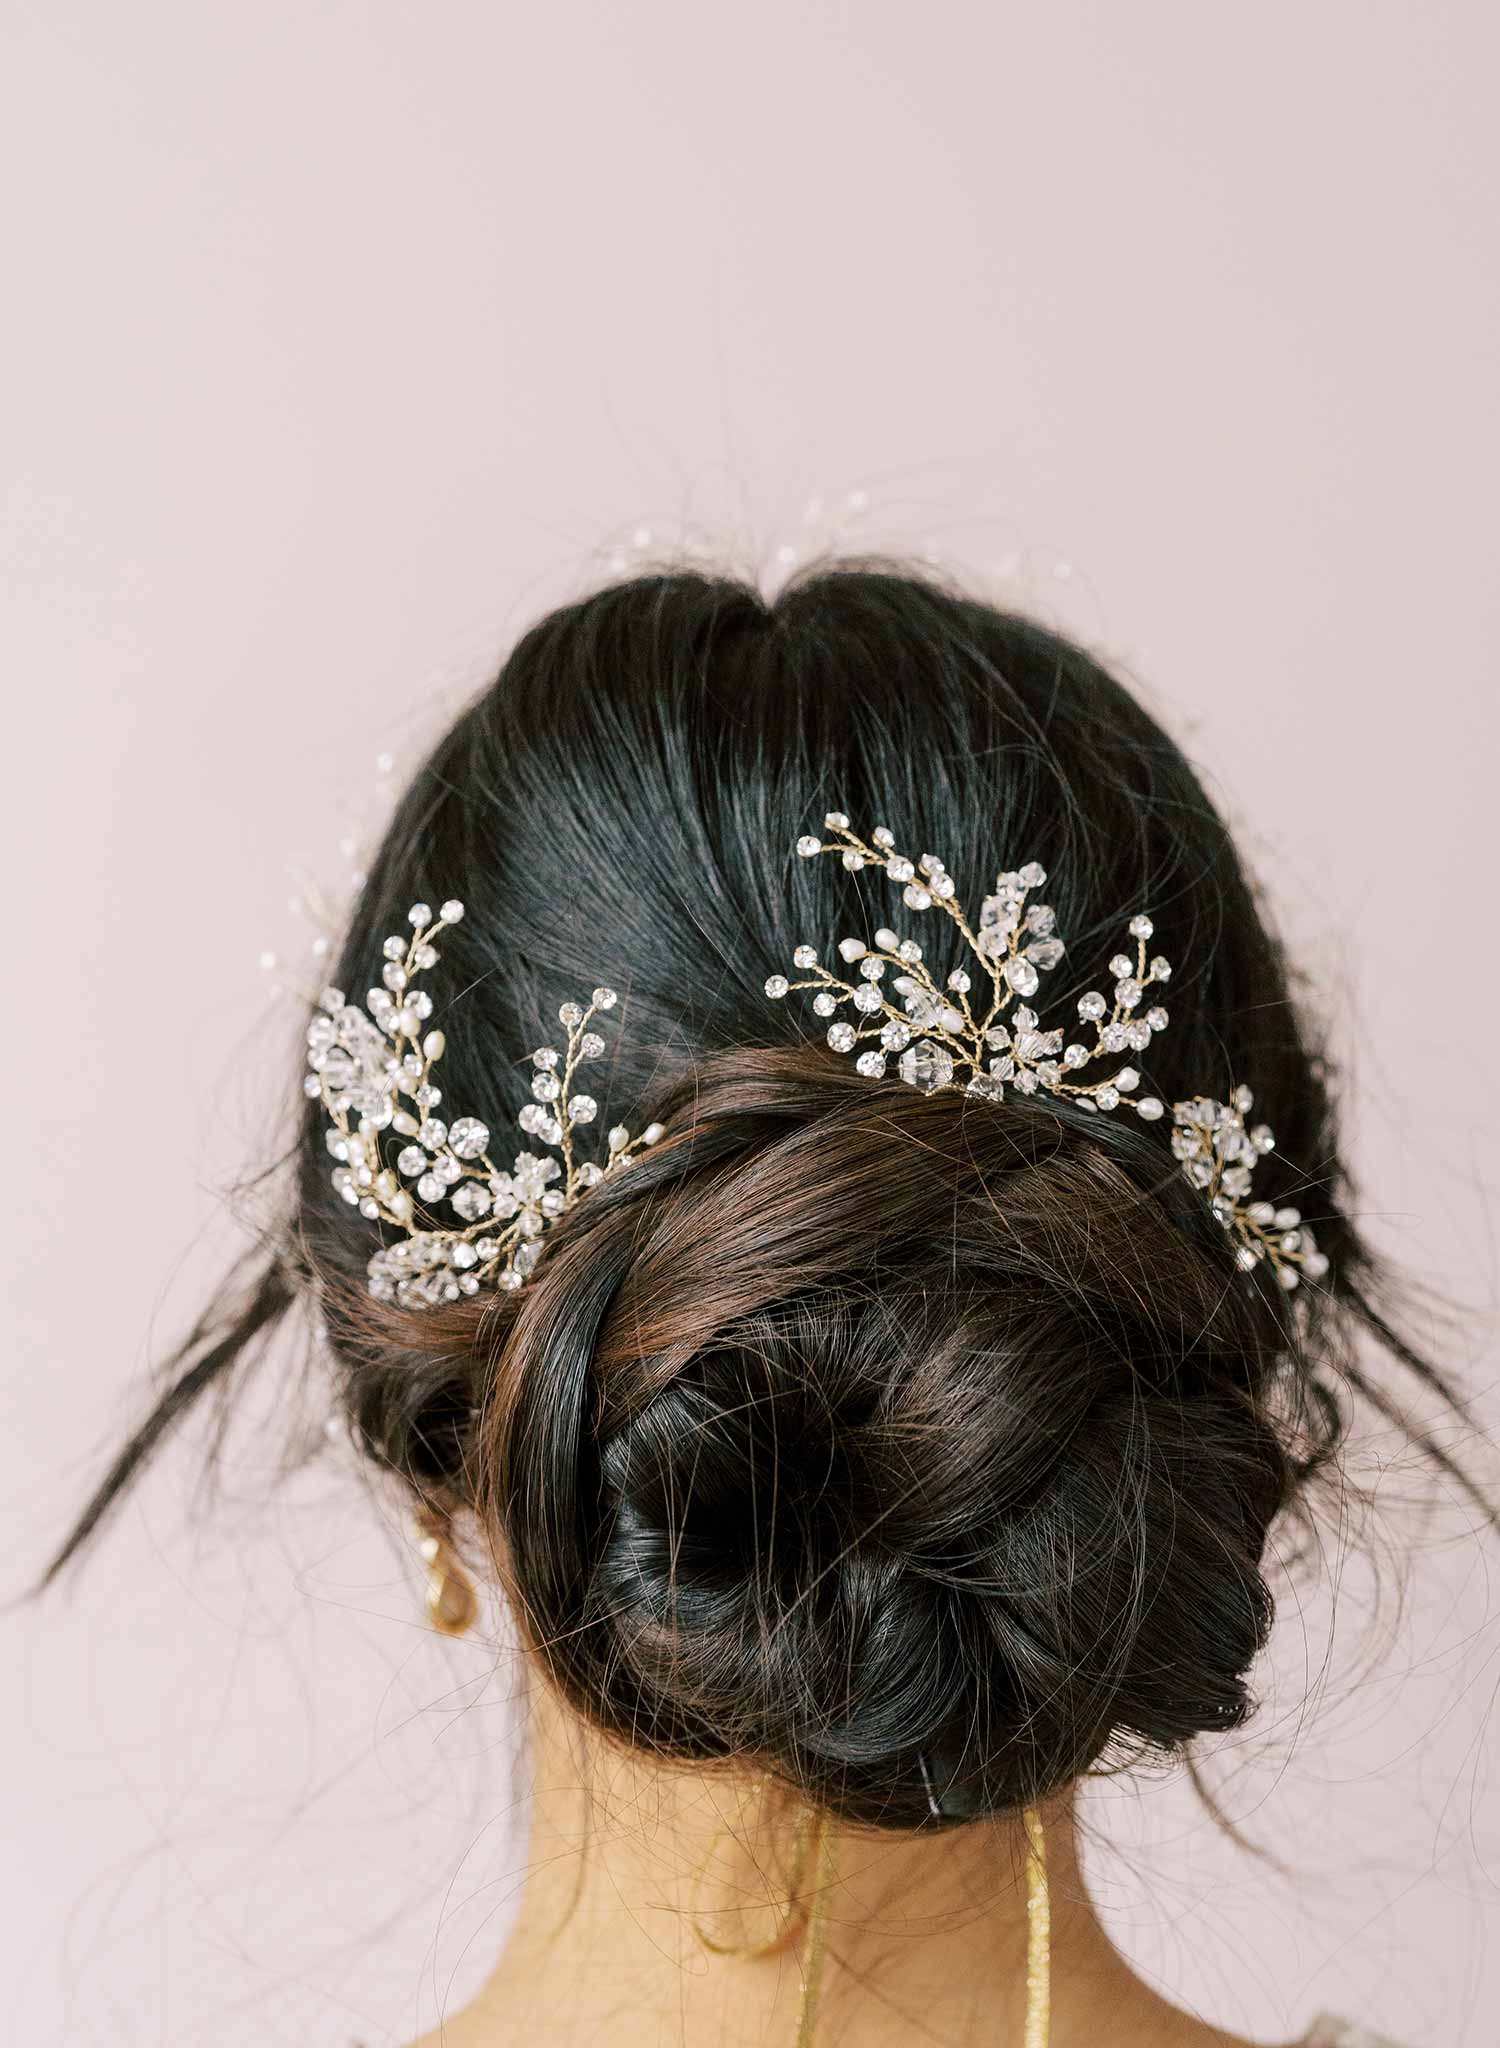 Bridal crystal hair accessories, bobby pins - Crystal baby's breath pin set of 3 - | Twigs & Honey LLC